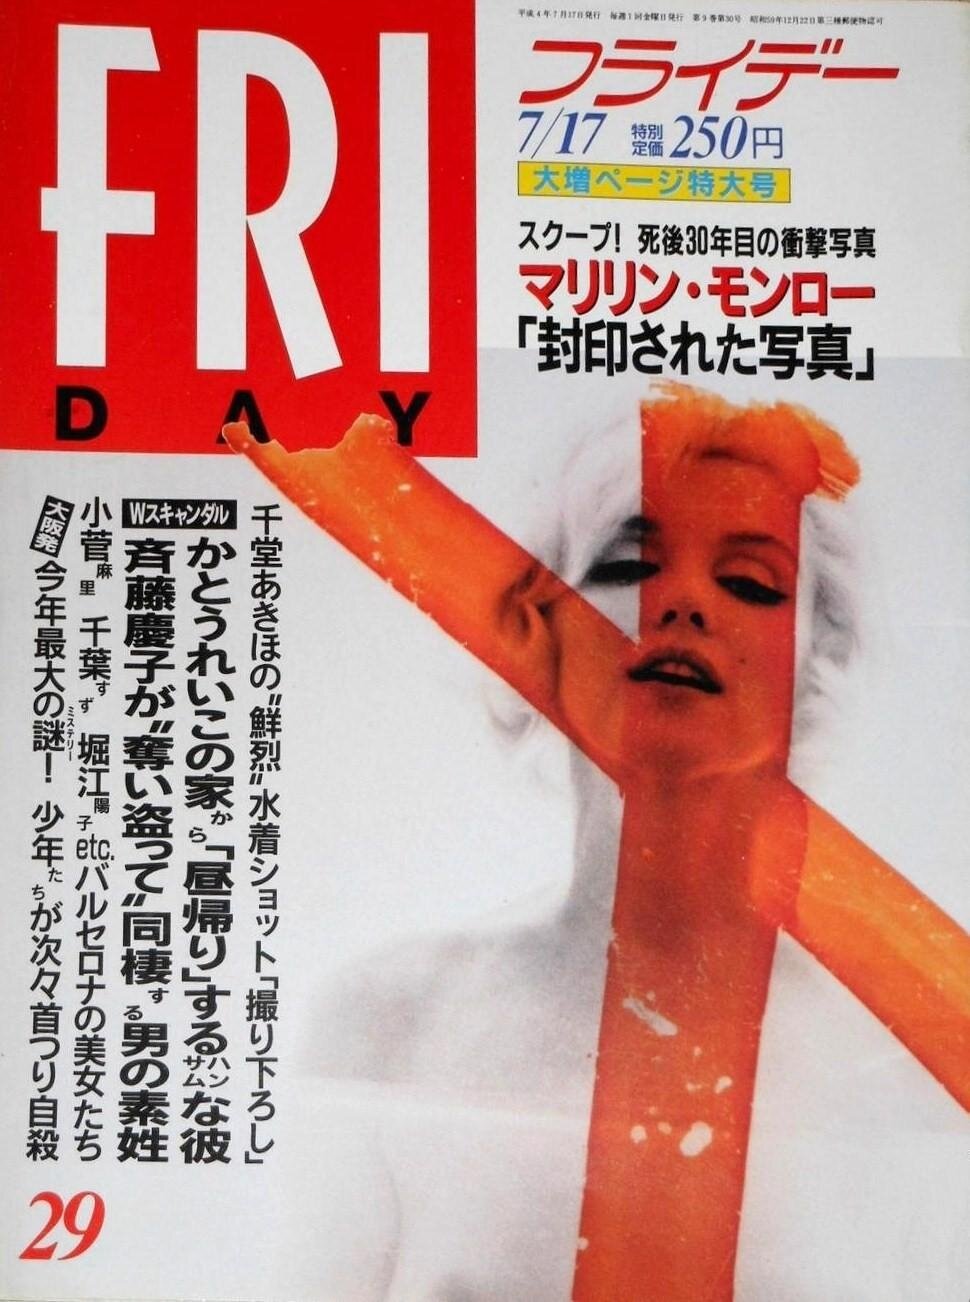 1992-07-17-friday-japon